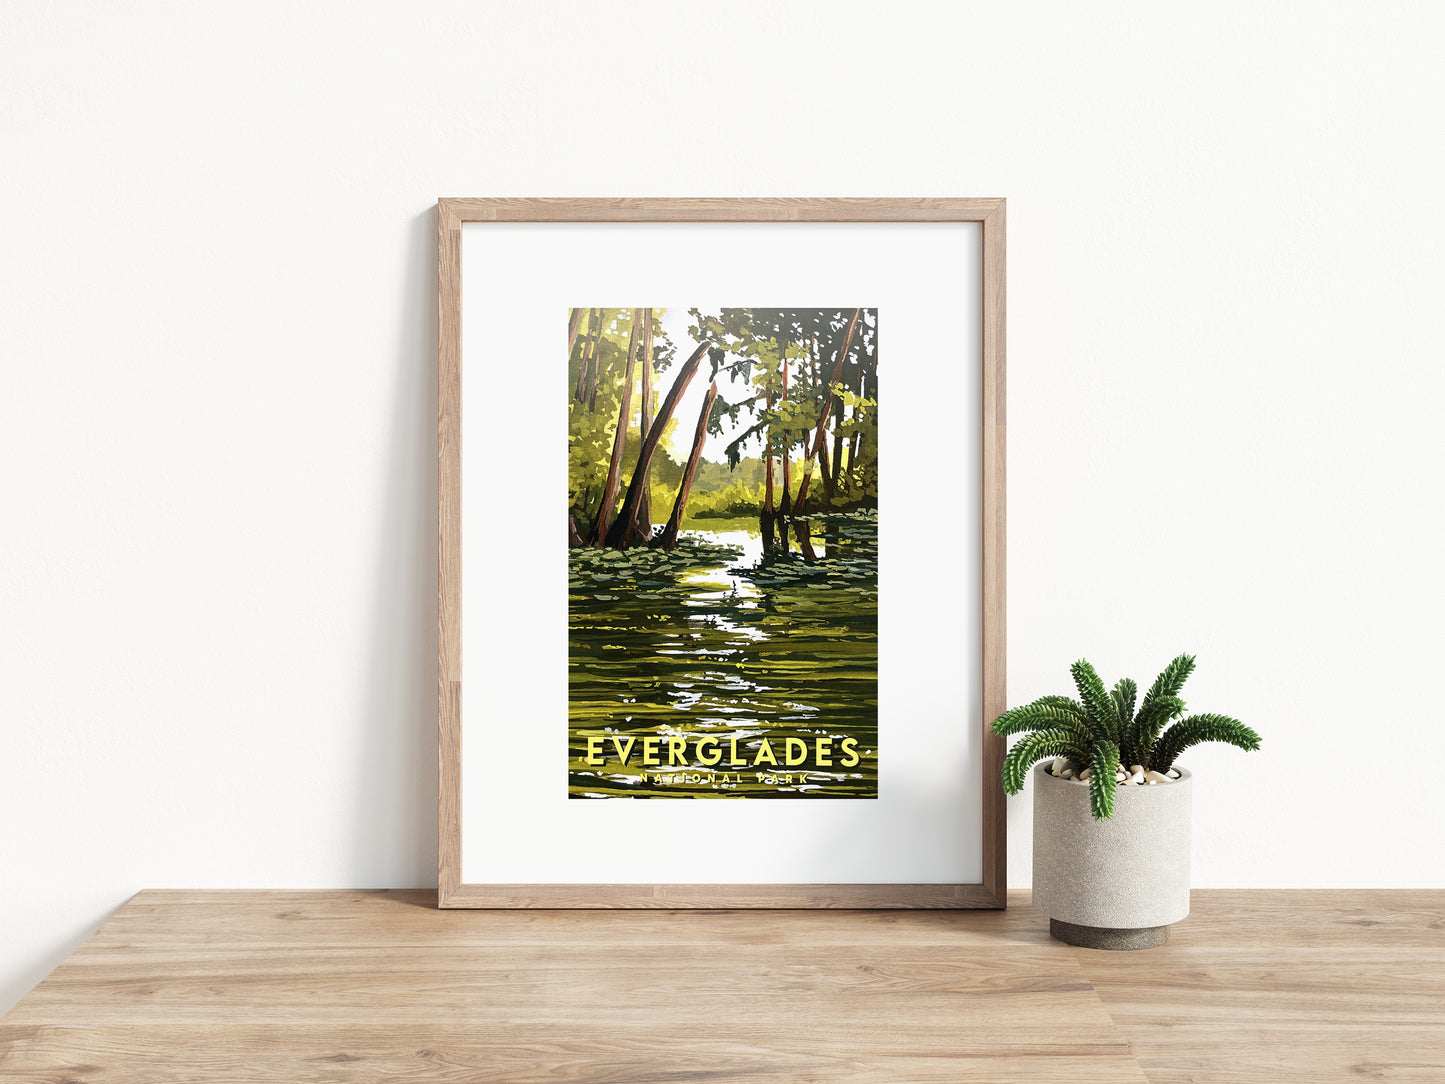 'Everglades' National Park Travel Poster